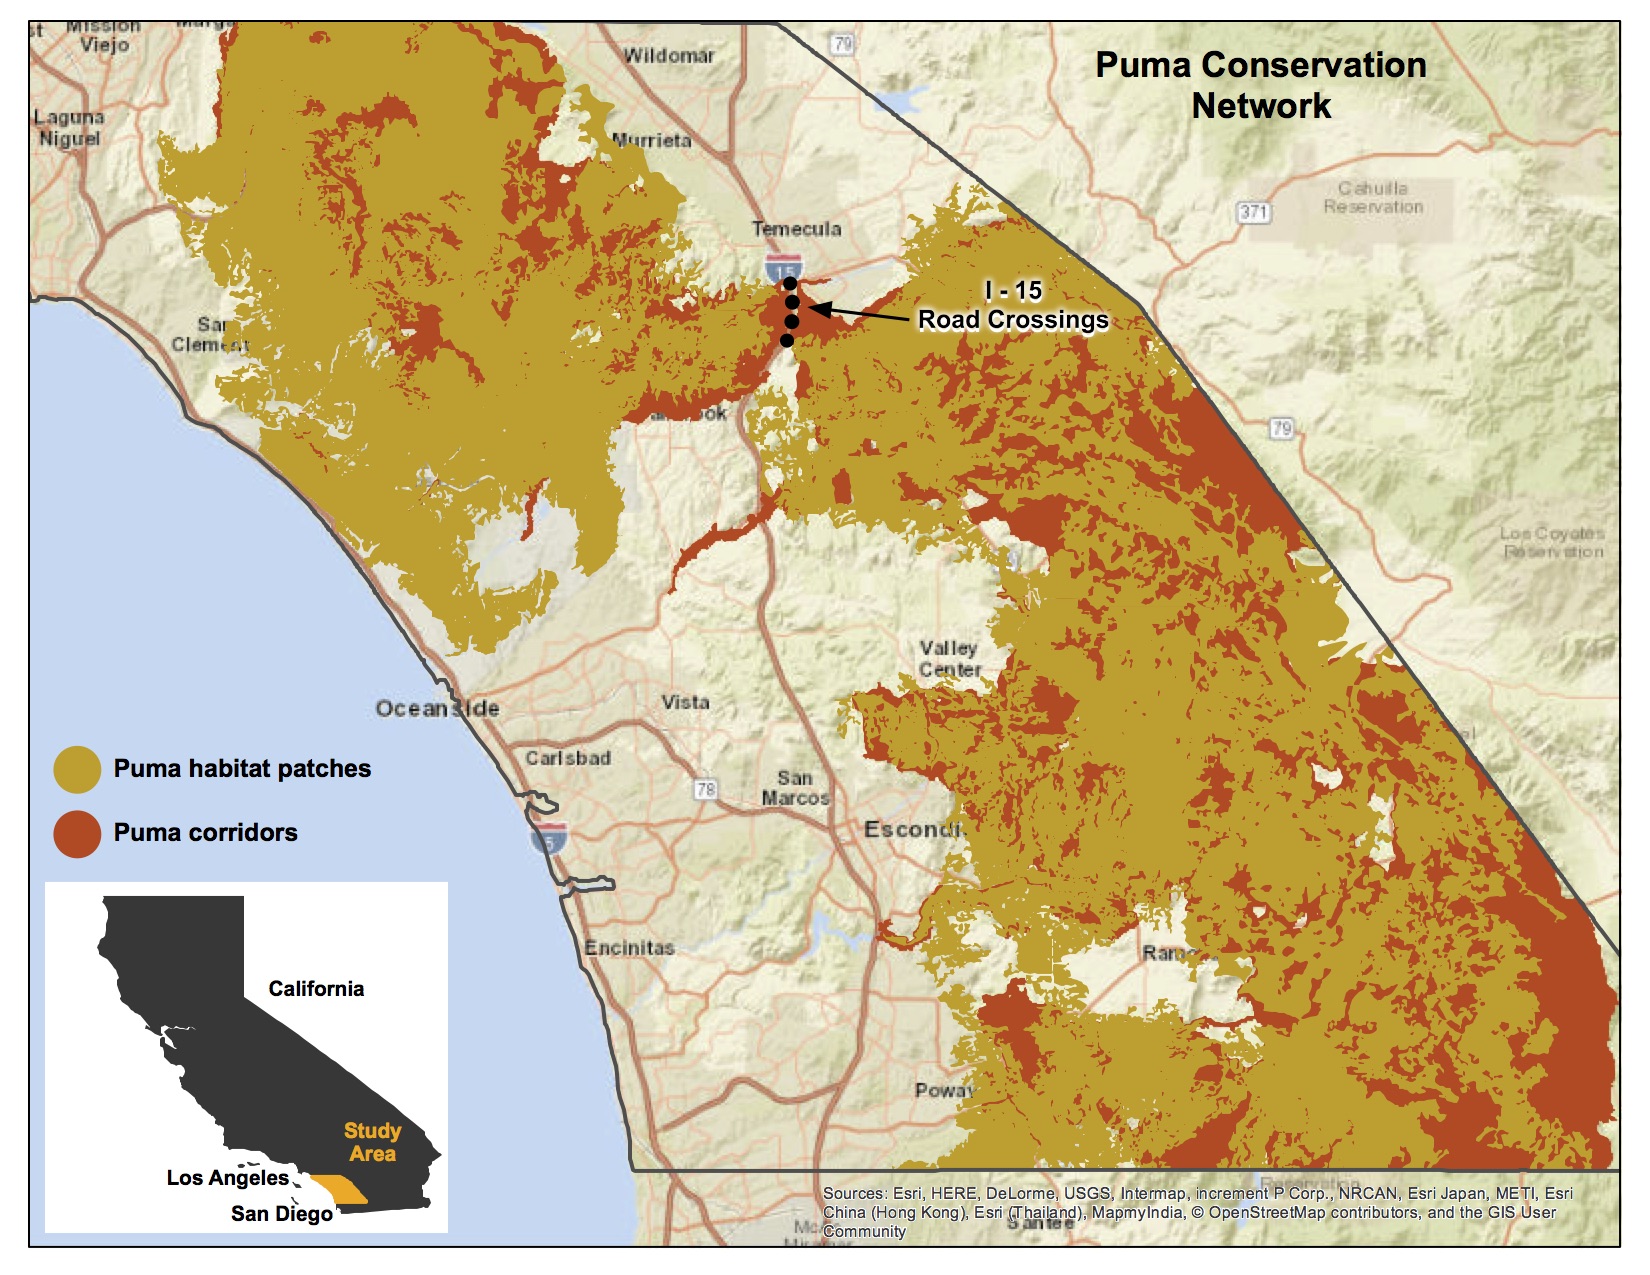 Puma conservation network